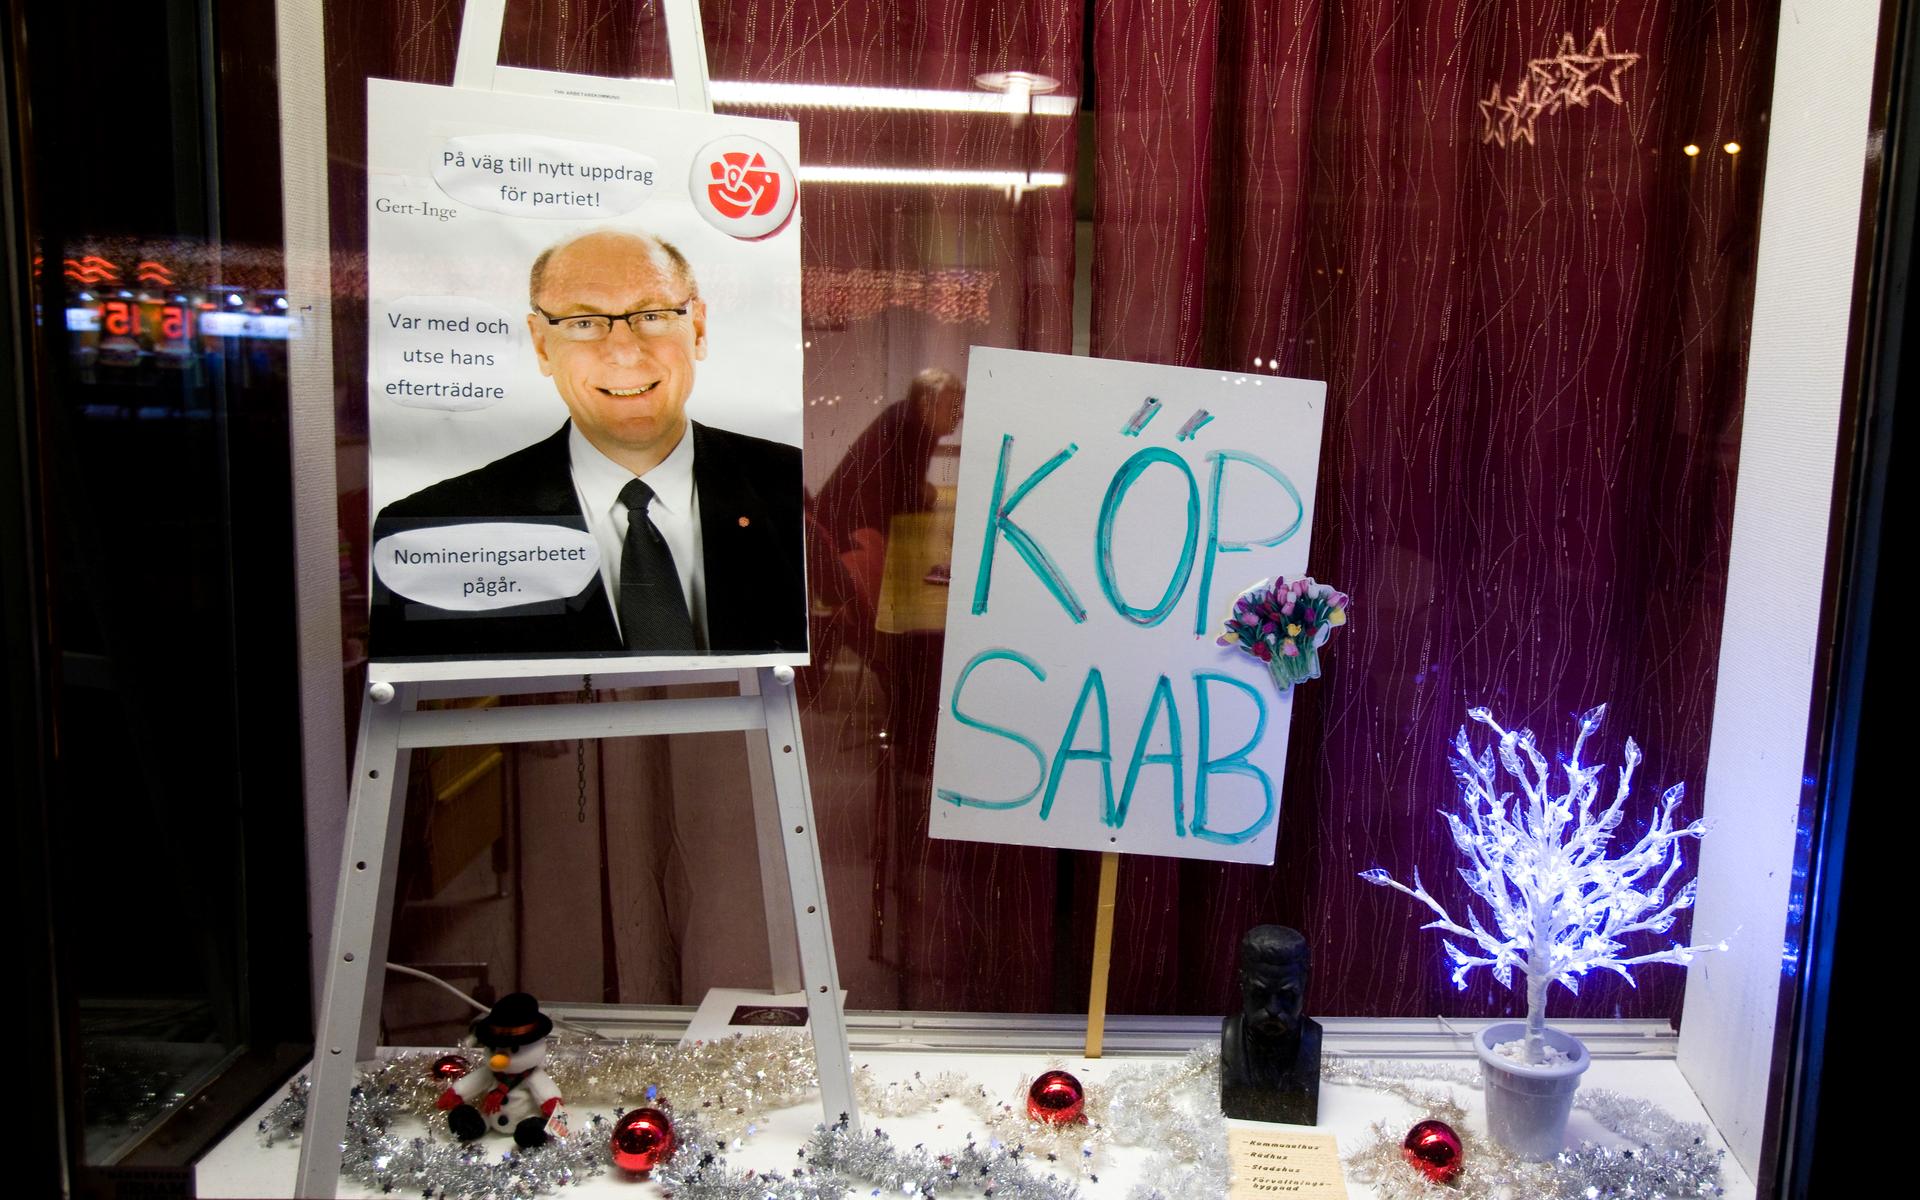 Köp Saab, skylt i fönstret hos ArbetarkommunenGert-Inge Andersson, (S) kommunalråd